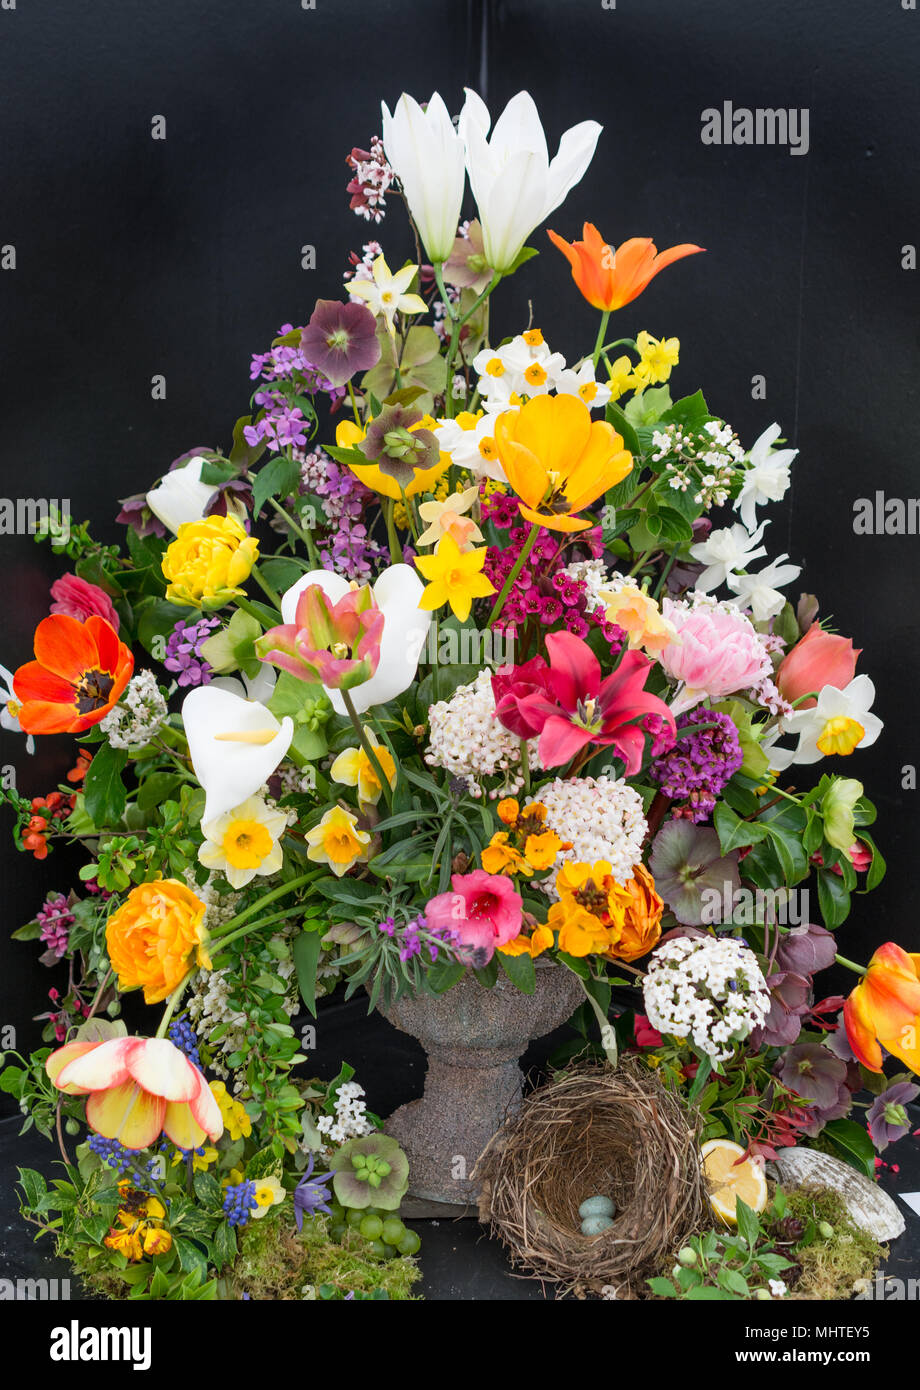 Large flower arrangement against a black background Stock Photo